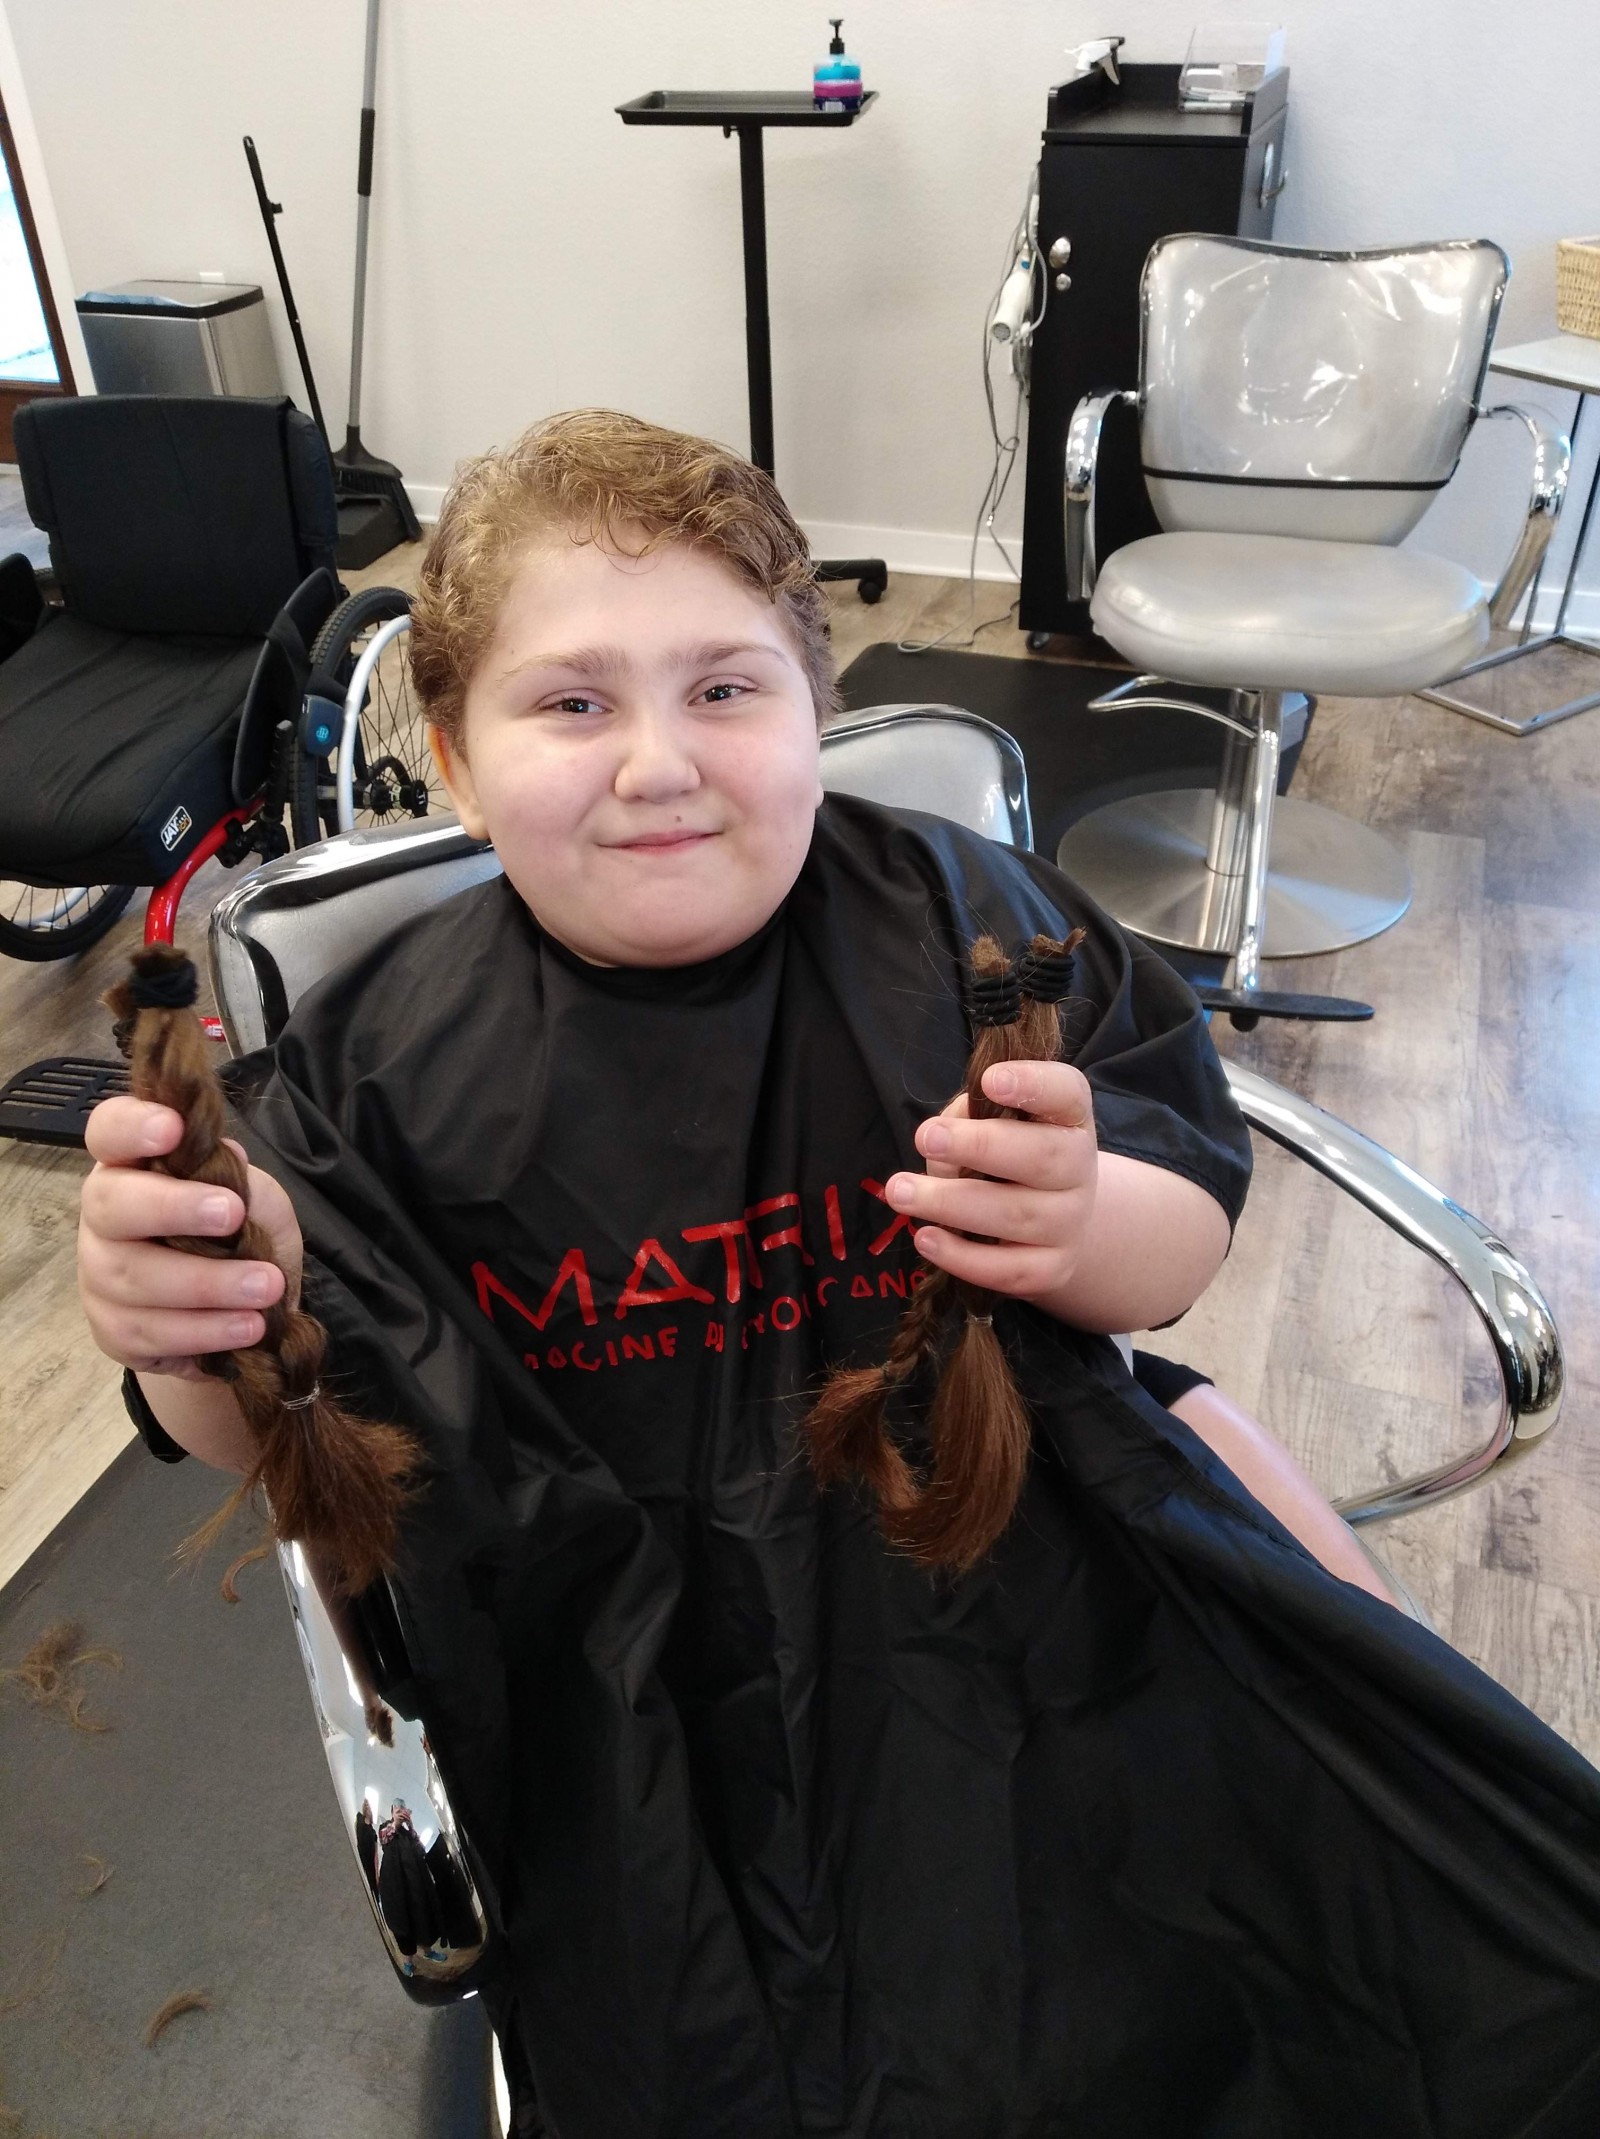 Haircut and donation